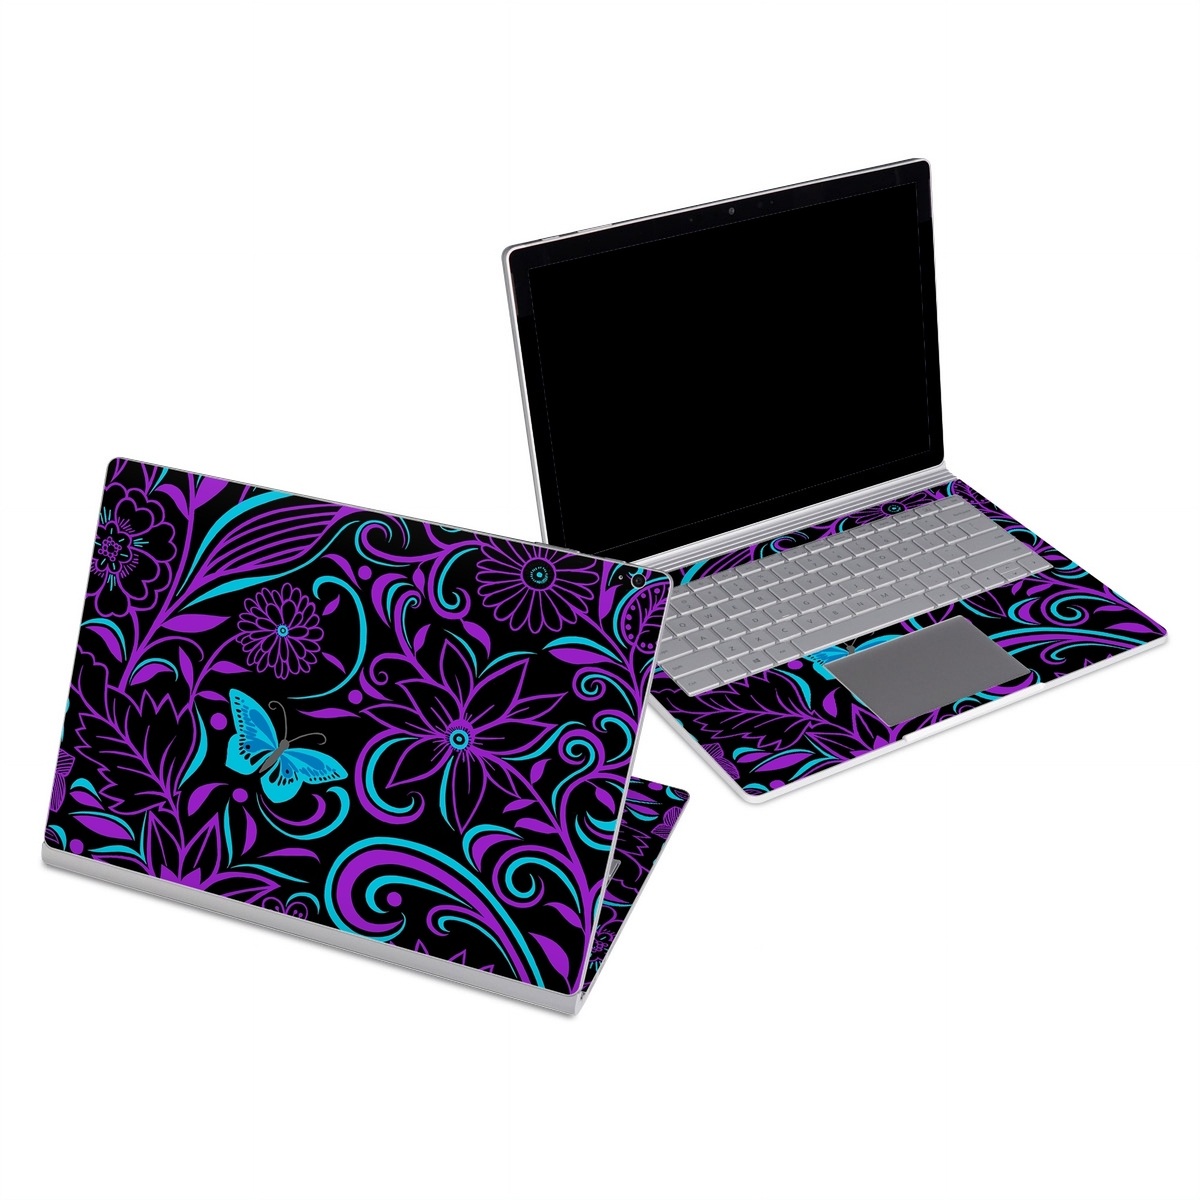 Microsoft Surface Book Series Skin design of Pattern, Purple, Violet, Turquoise, Teal, Design, Floral design, Visual arts, Magenta, Motif, with black, purple, blue colors